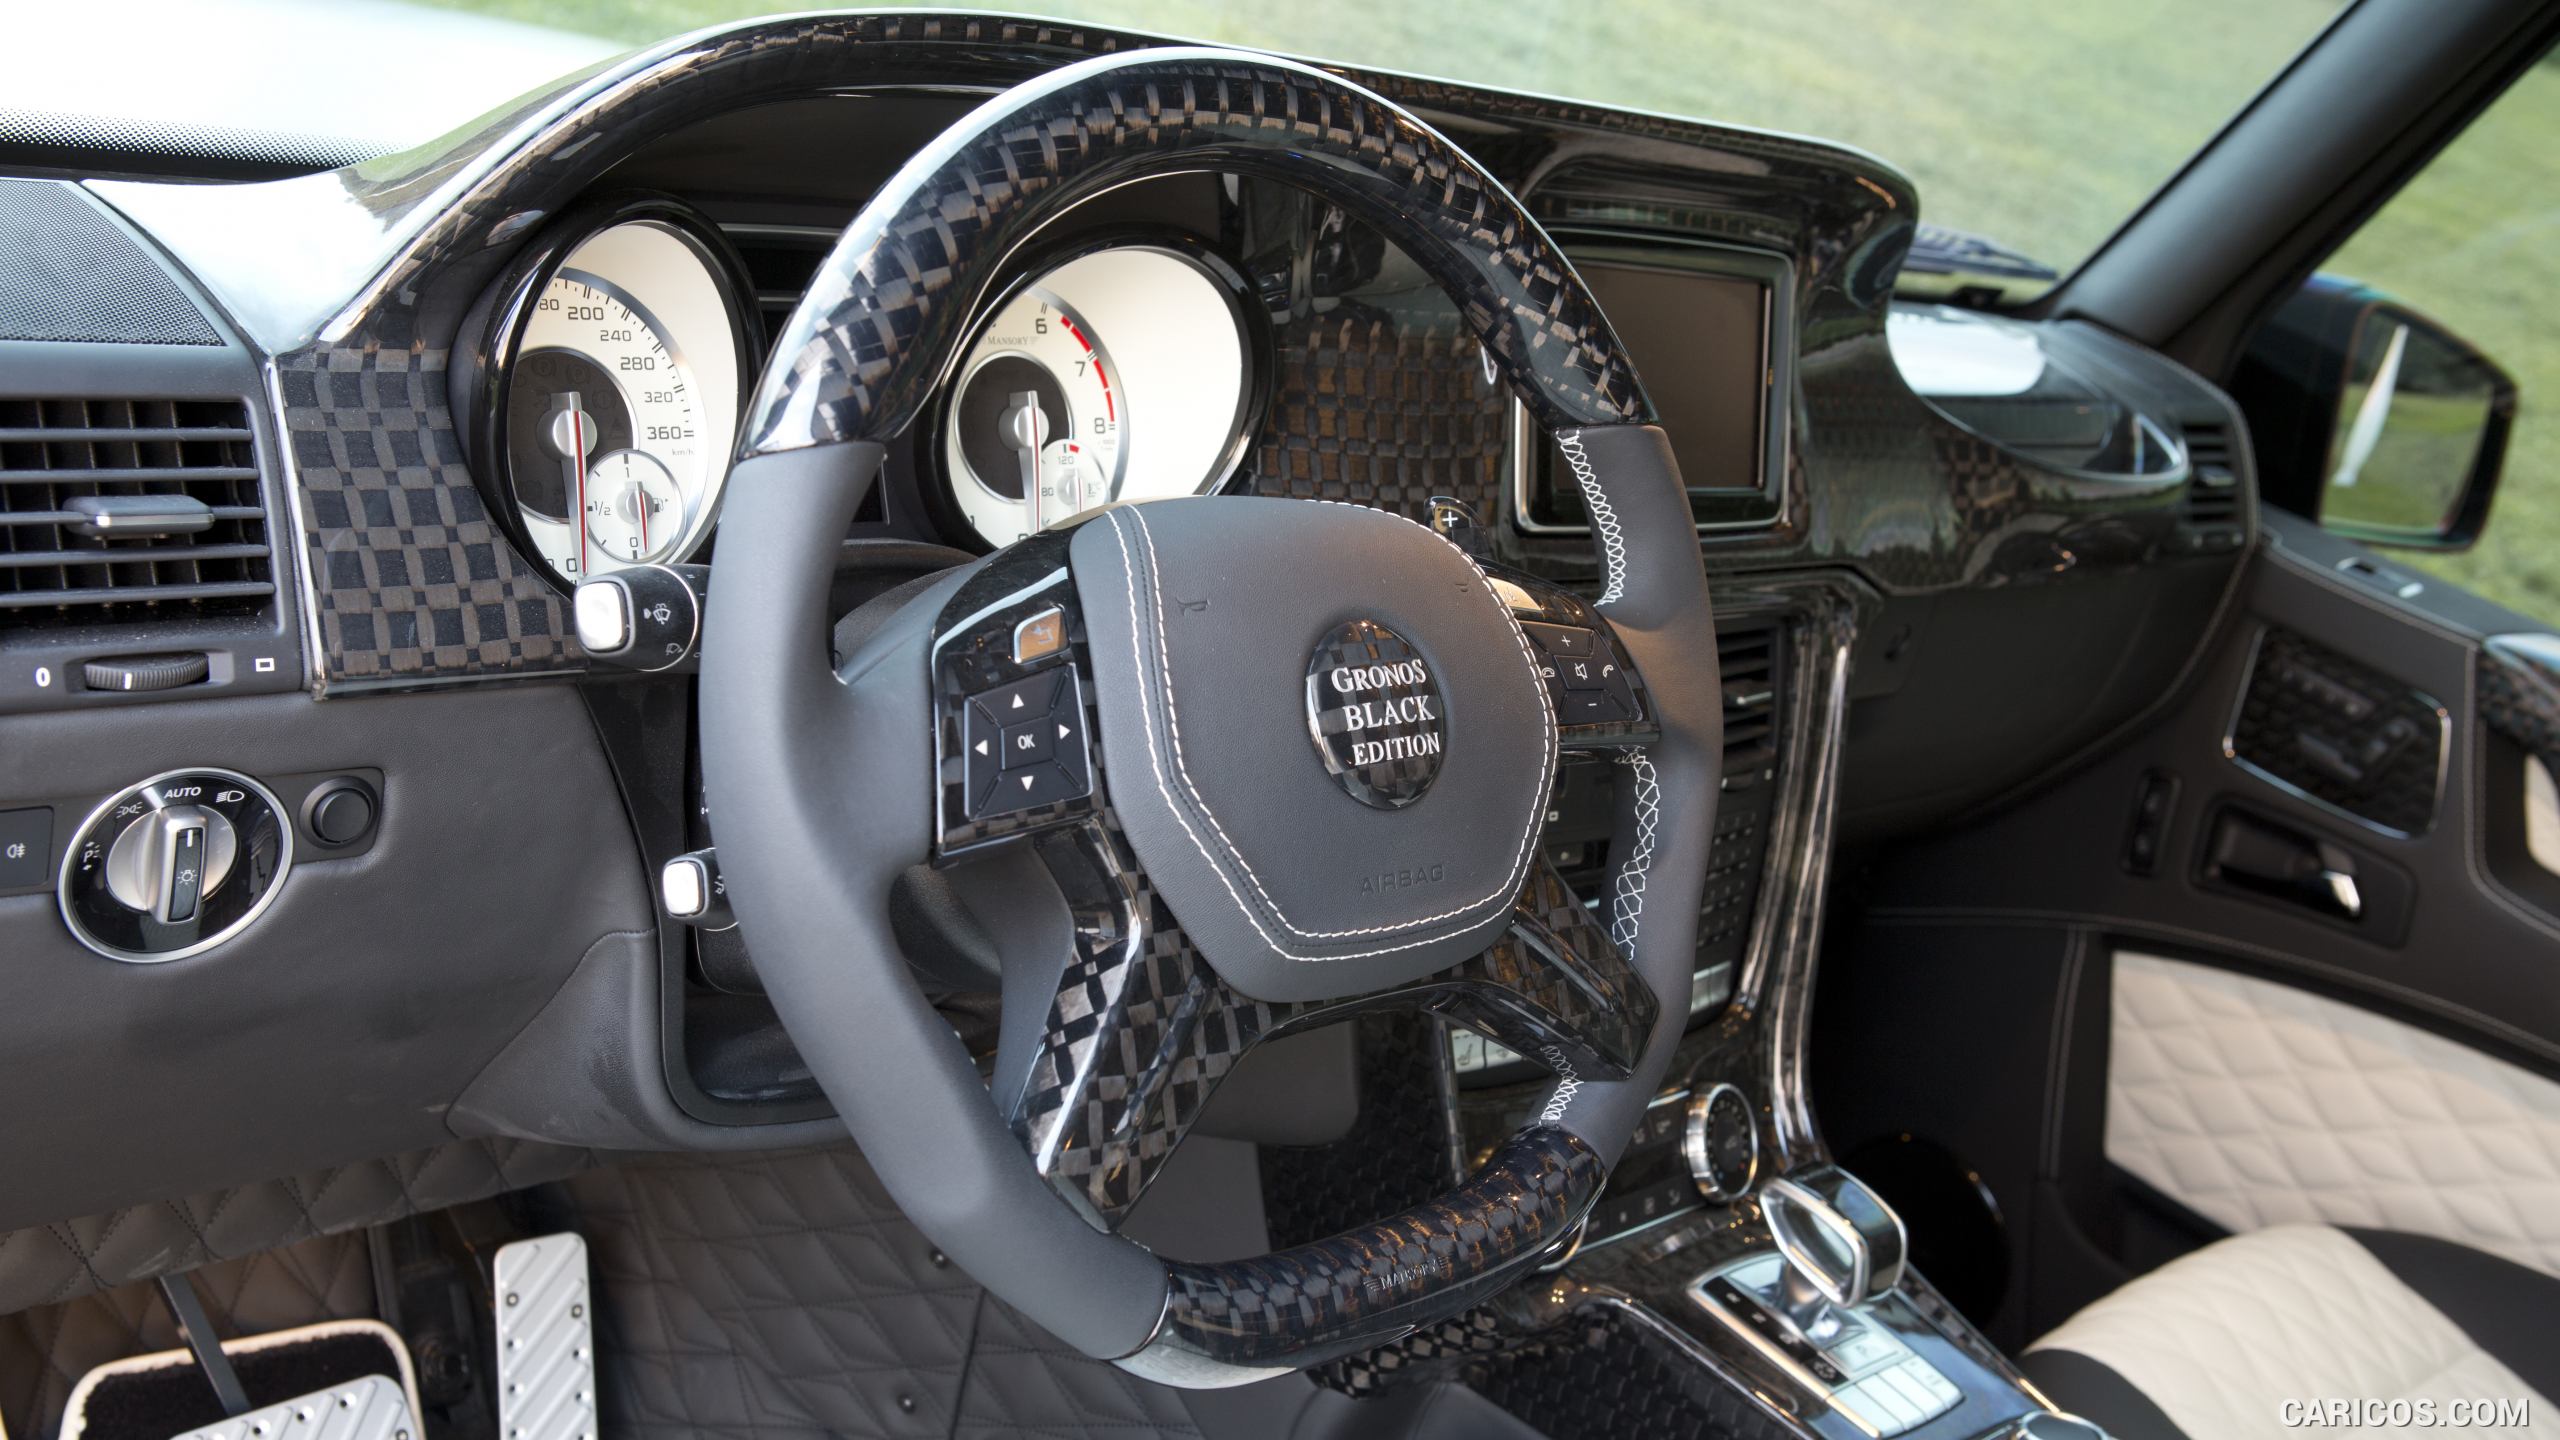 2016 MANSORY GRONOS Black Edition based on Mercedes G63 AMG - Interior Steering Wheel, #11 of 16